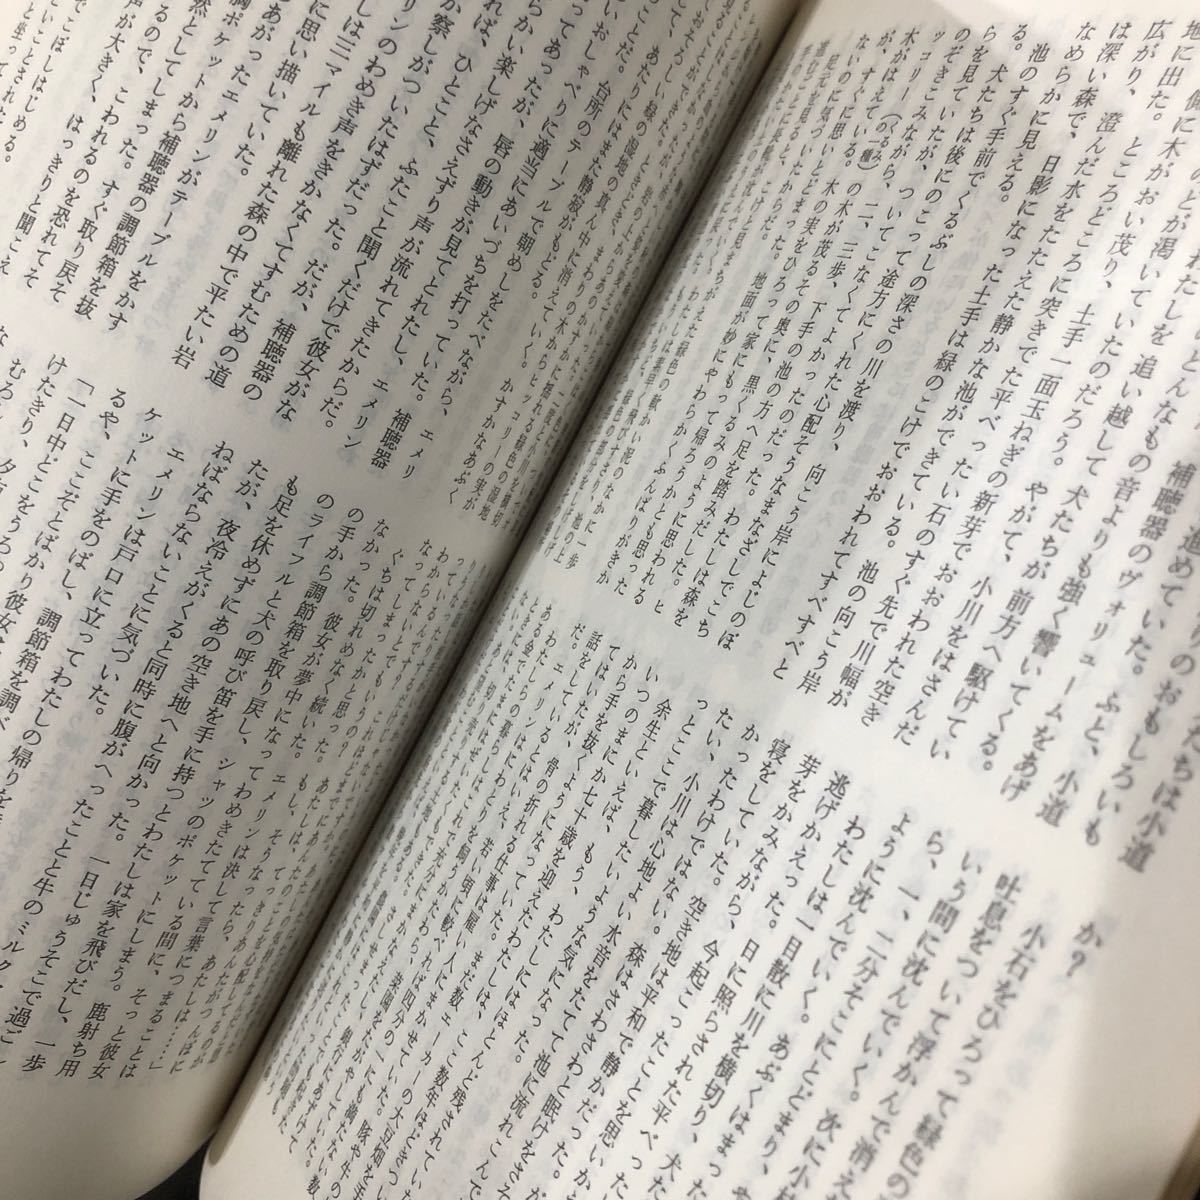 ne84 mistake teli magazine 1976 year 6 month number . river bookstore Showa era 51 year novel literary art thought history economics essay genuine article language 